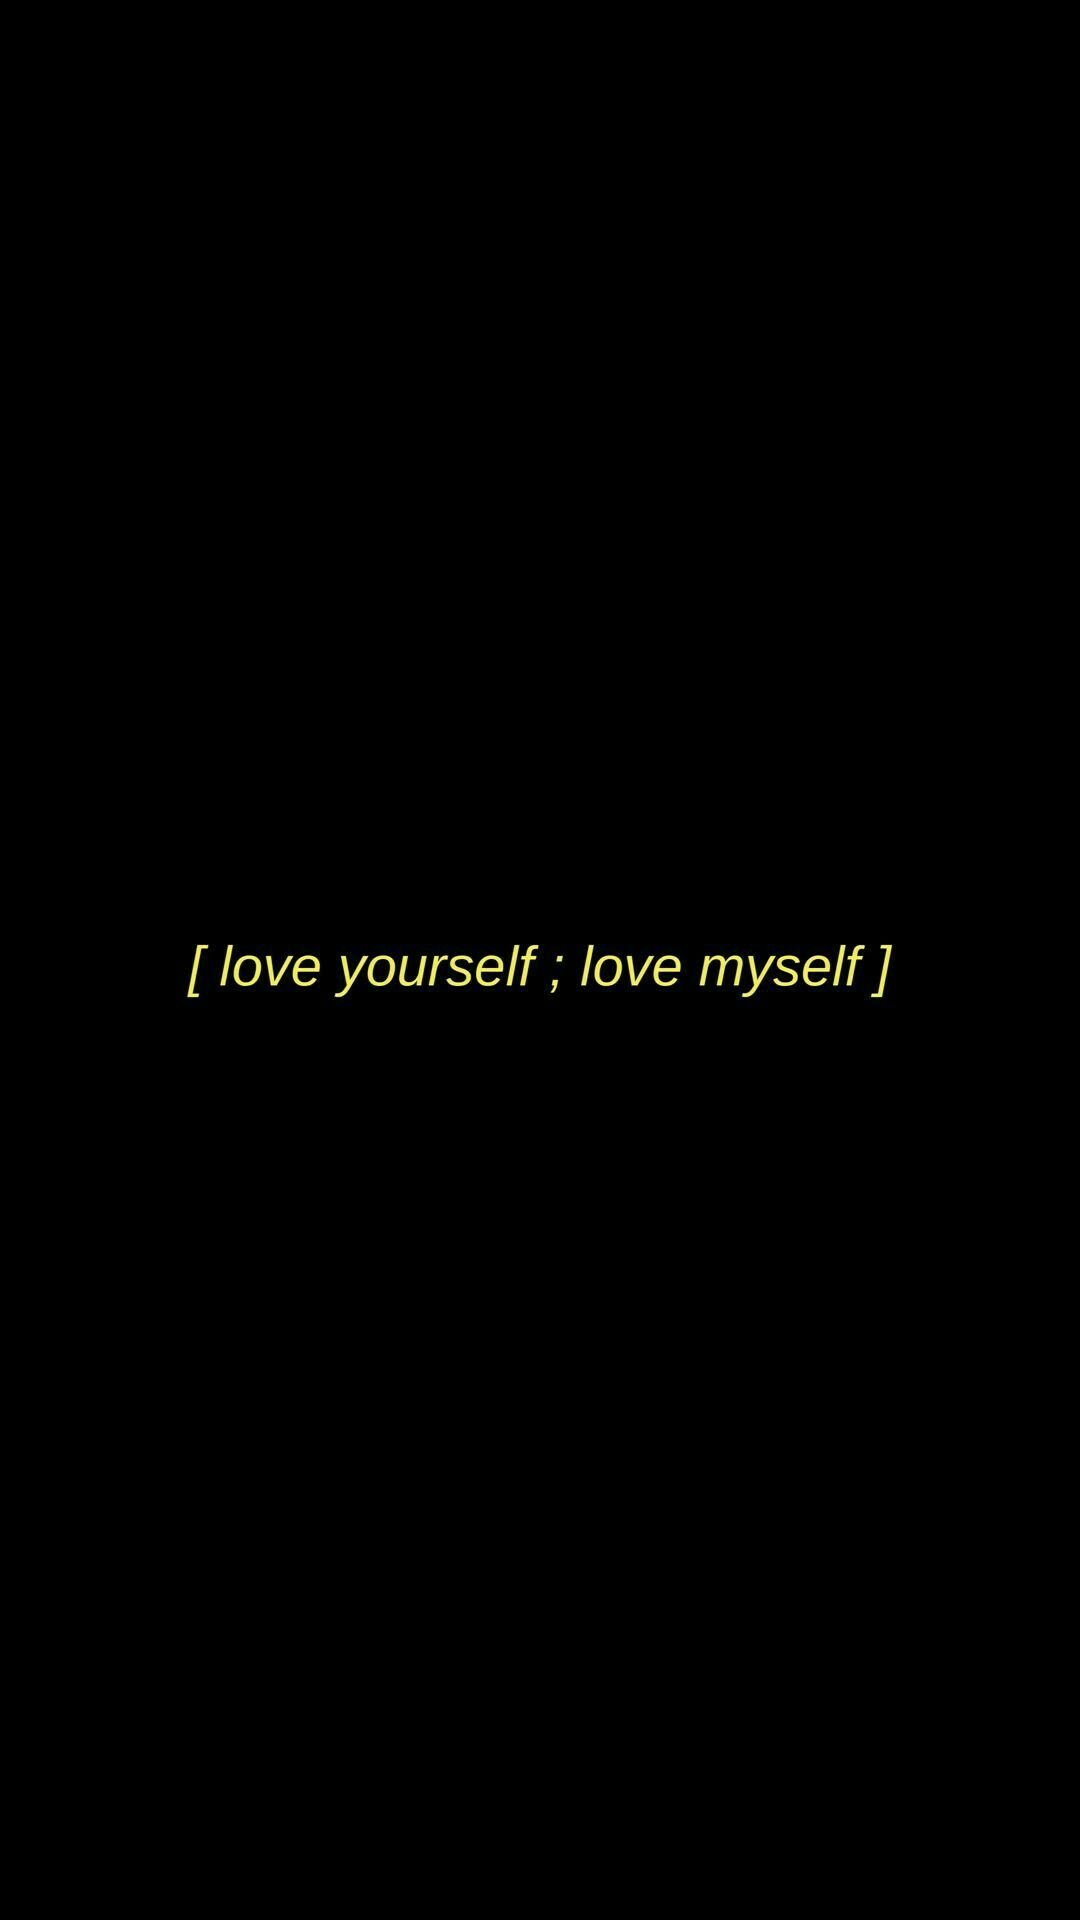 Love yourself - love myself